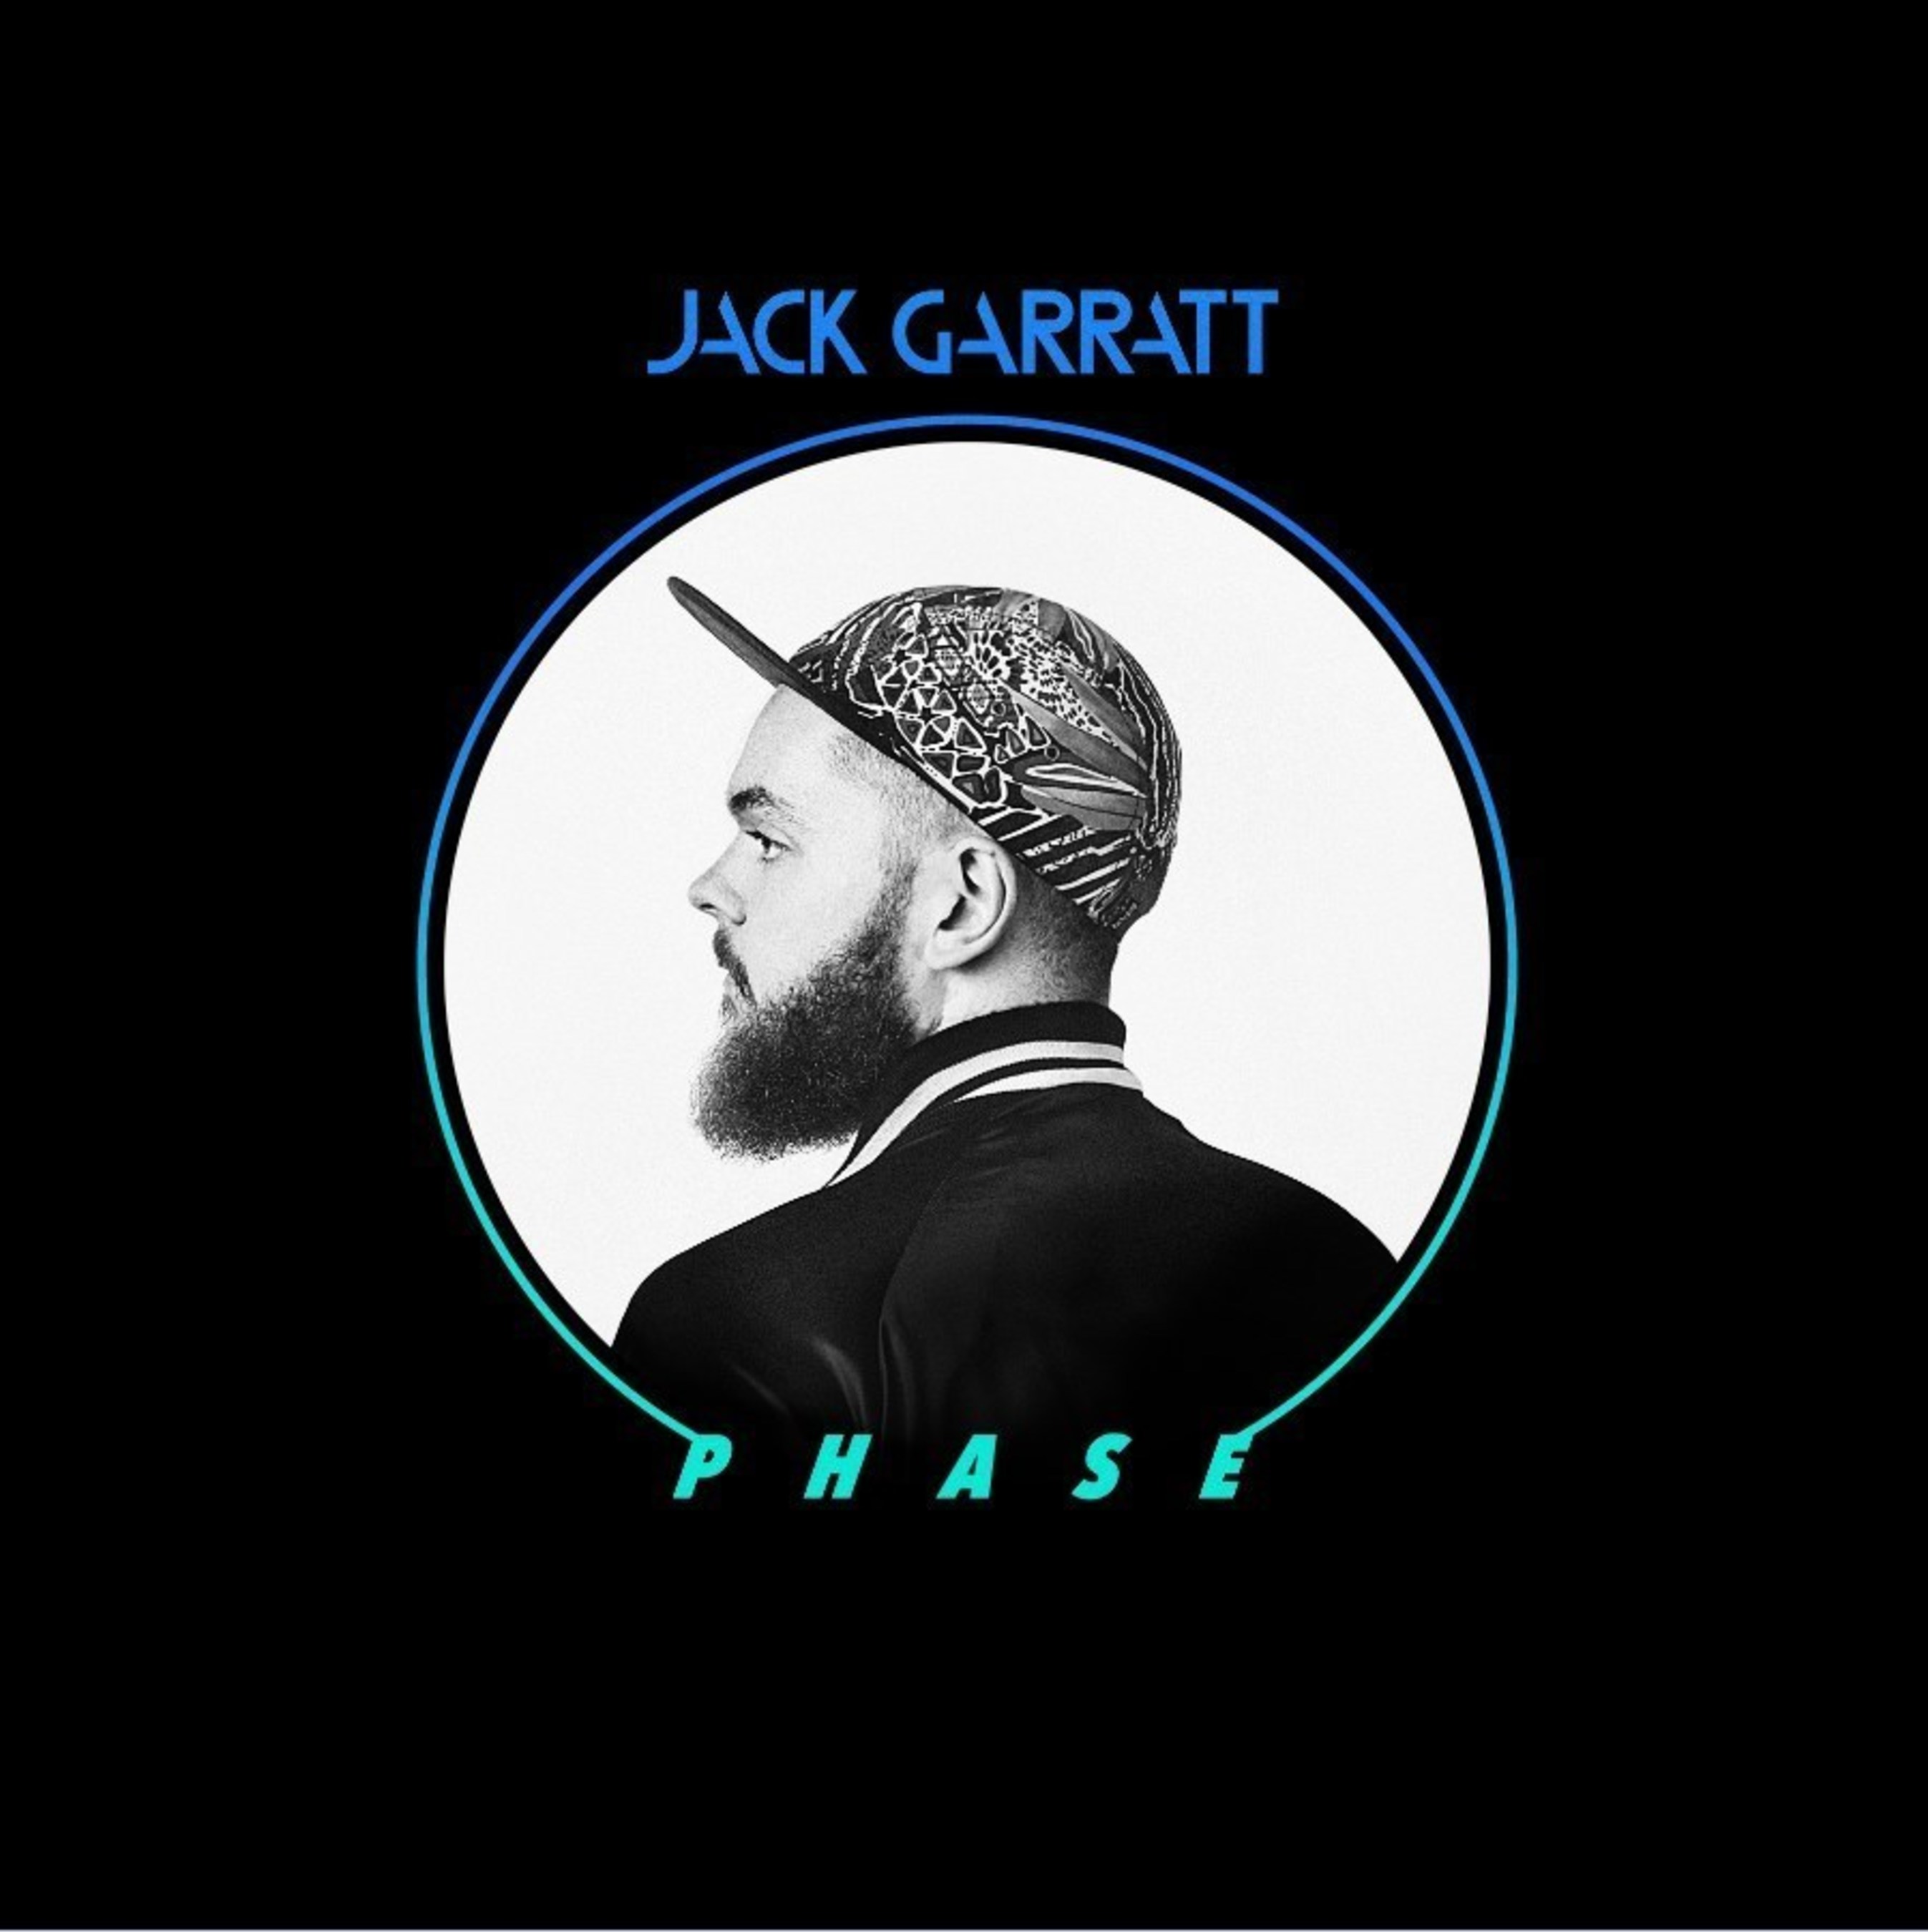 Jack Garratt To Release Debut Album, "Phase", On February 19th, 2016, Via Interscope Records